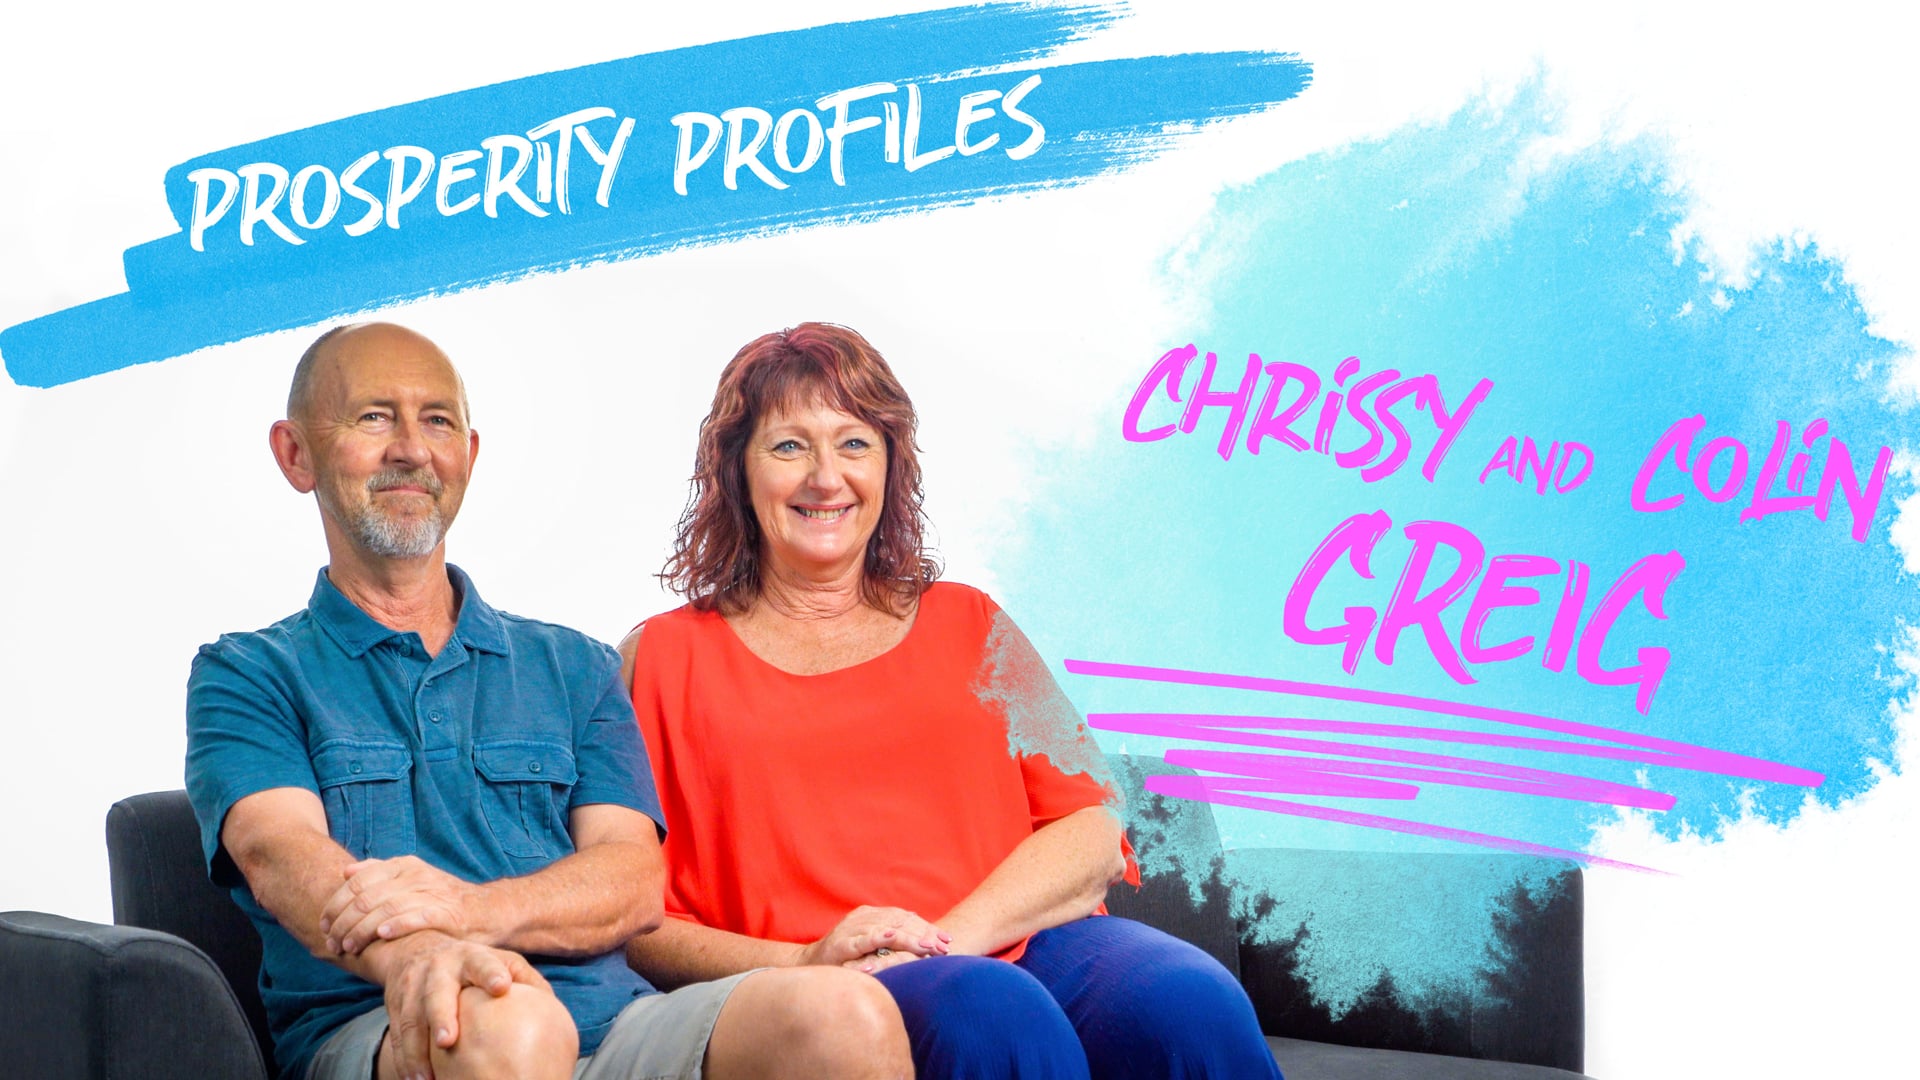 Chrissy & Colin Greig | Prosperity Profile